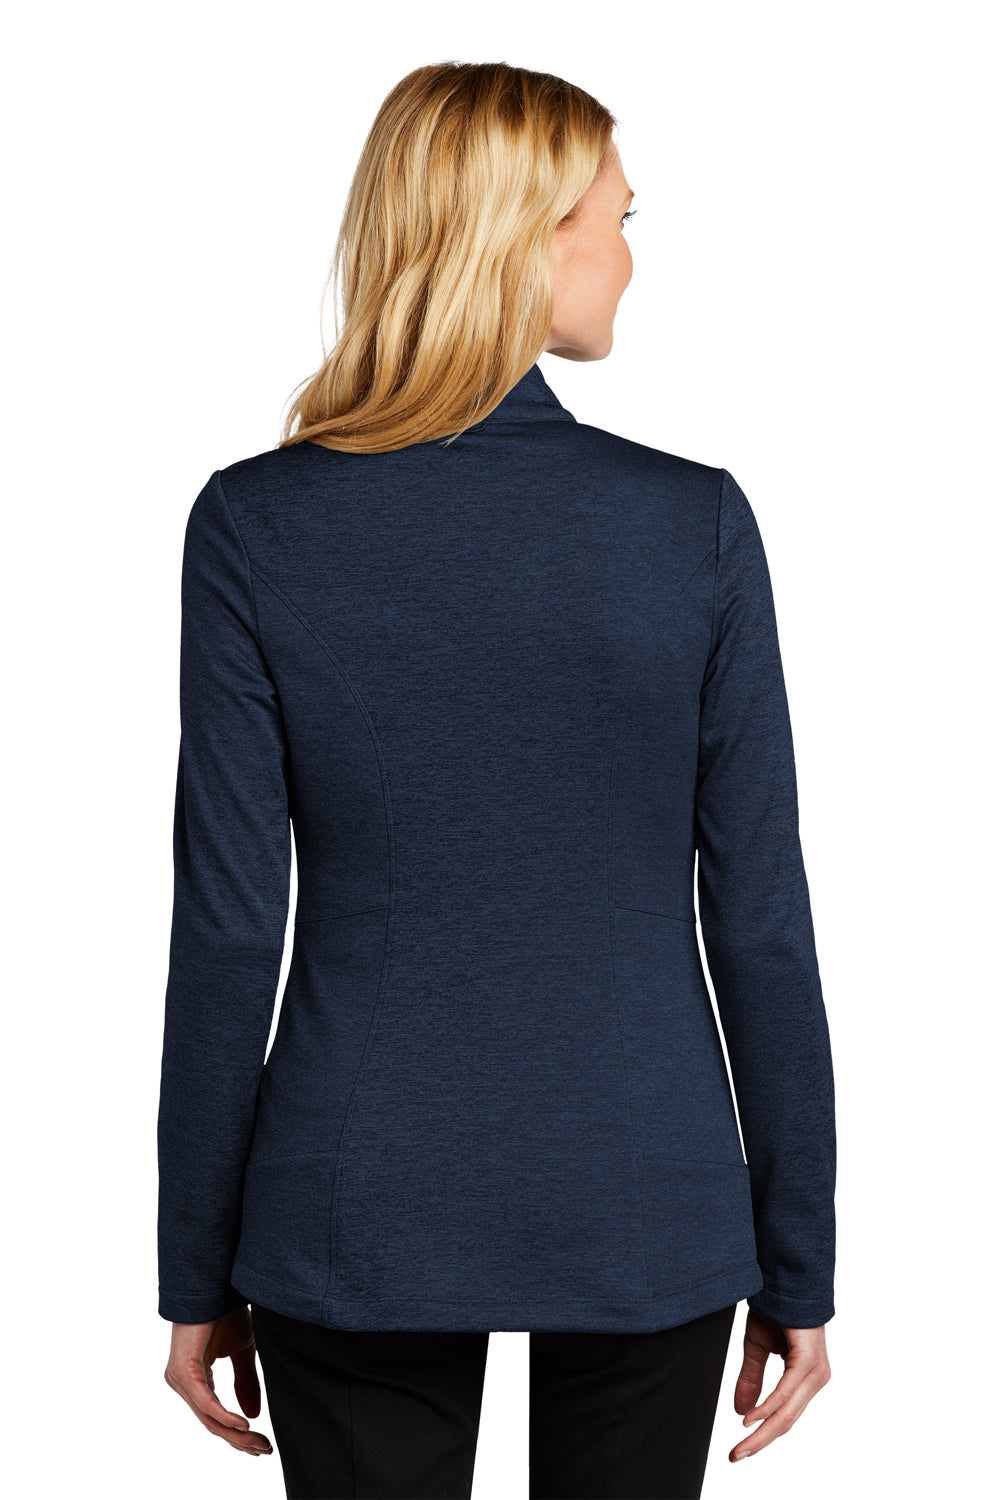 Port Authority Womens Collective Striated Full Zip Fleece Jacket Heather River Navy Blue Side